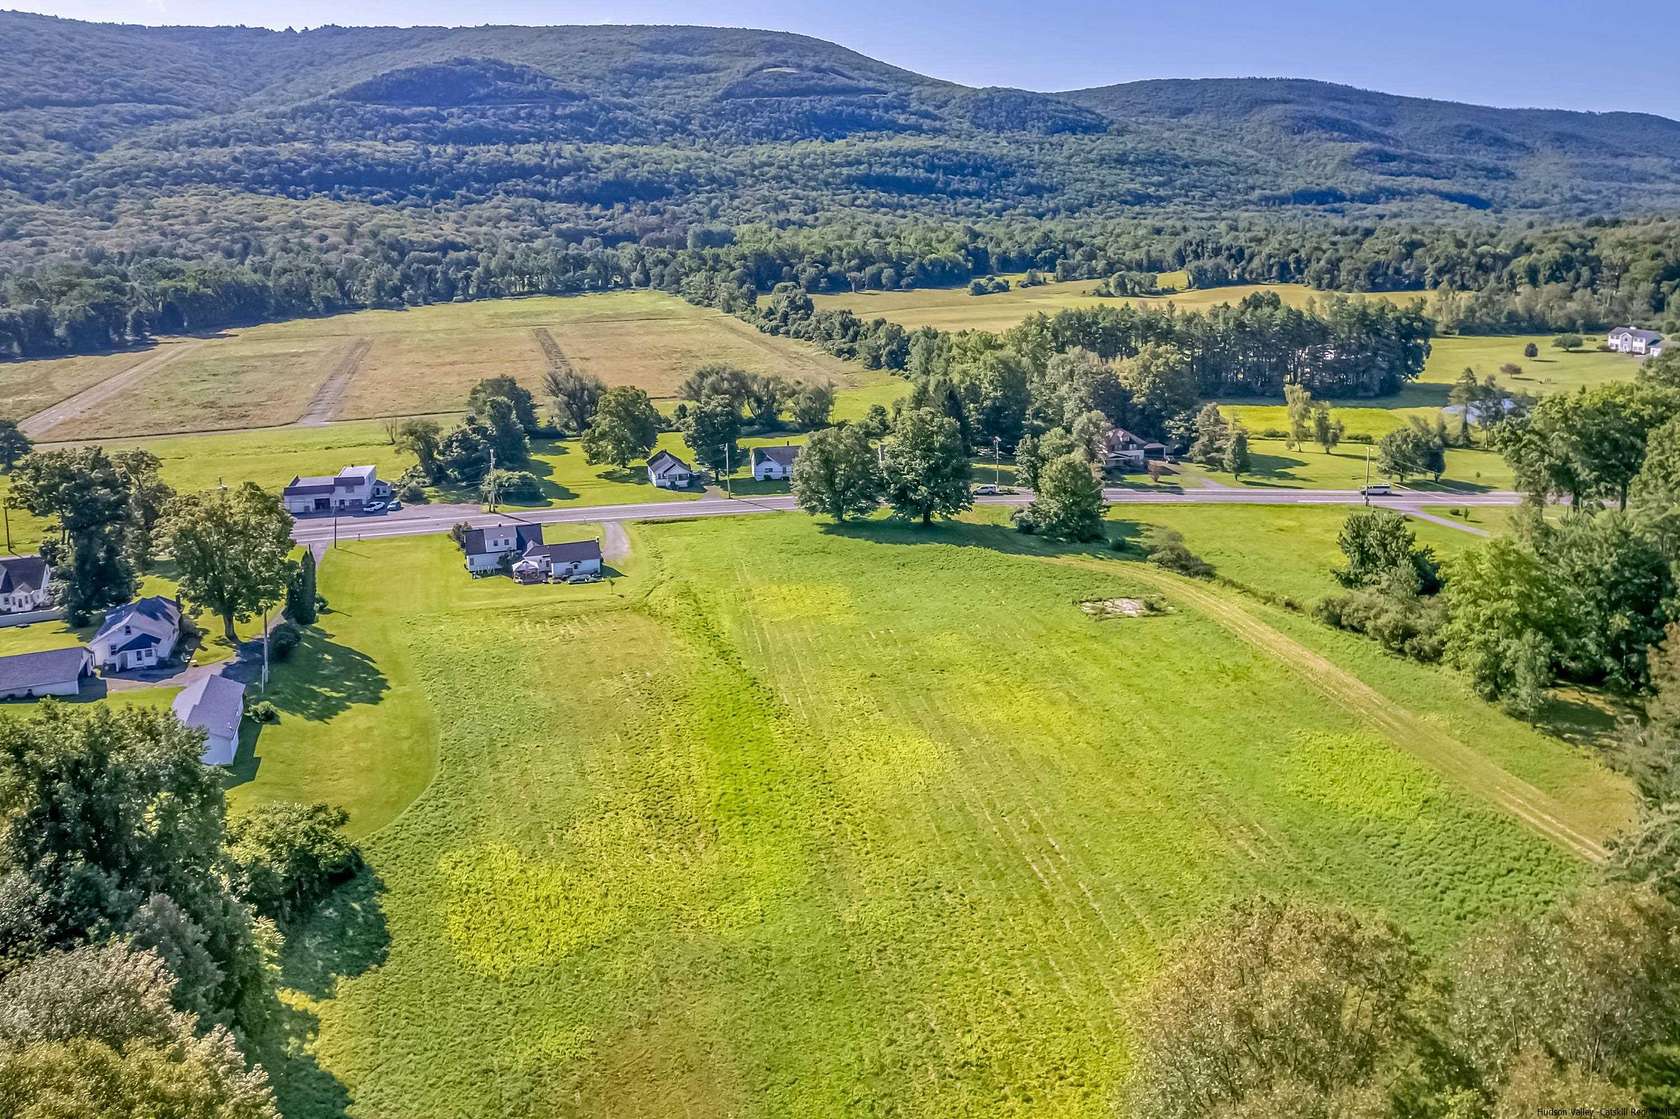 88 Acres of Land for Sale in Ellenville, New York